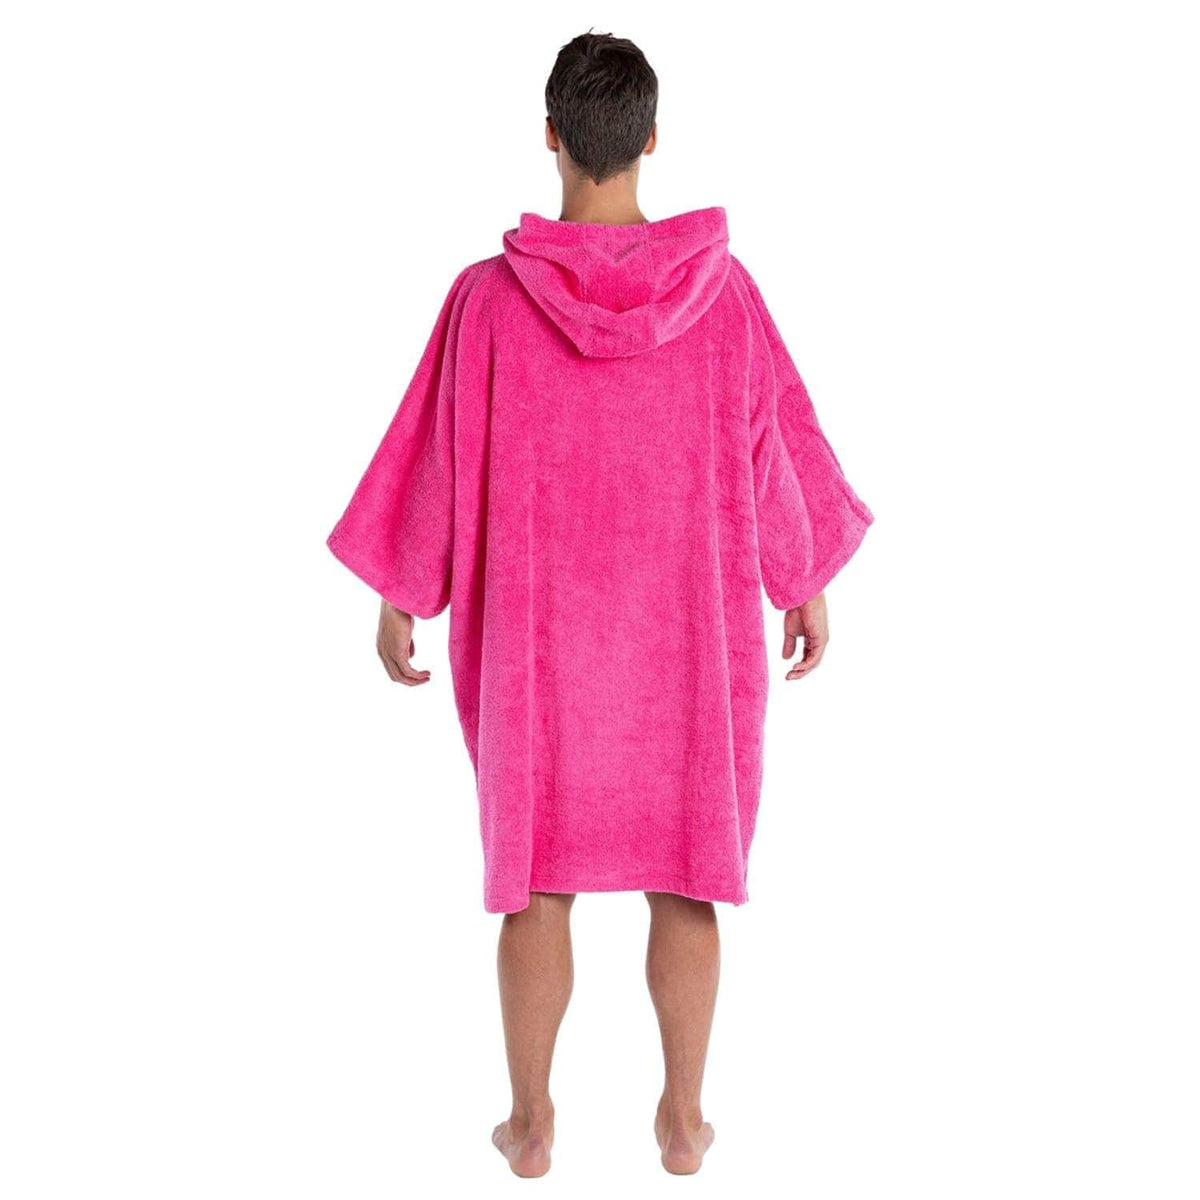 DryRobe Organic Cotton Short Sleeve Towel Dryrobe - Pink - Changing Robe Poncho Towel by Dryrobe